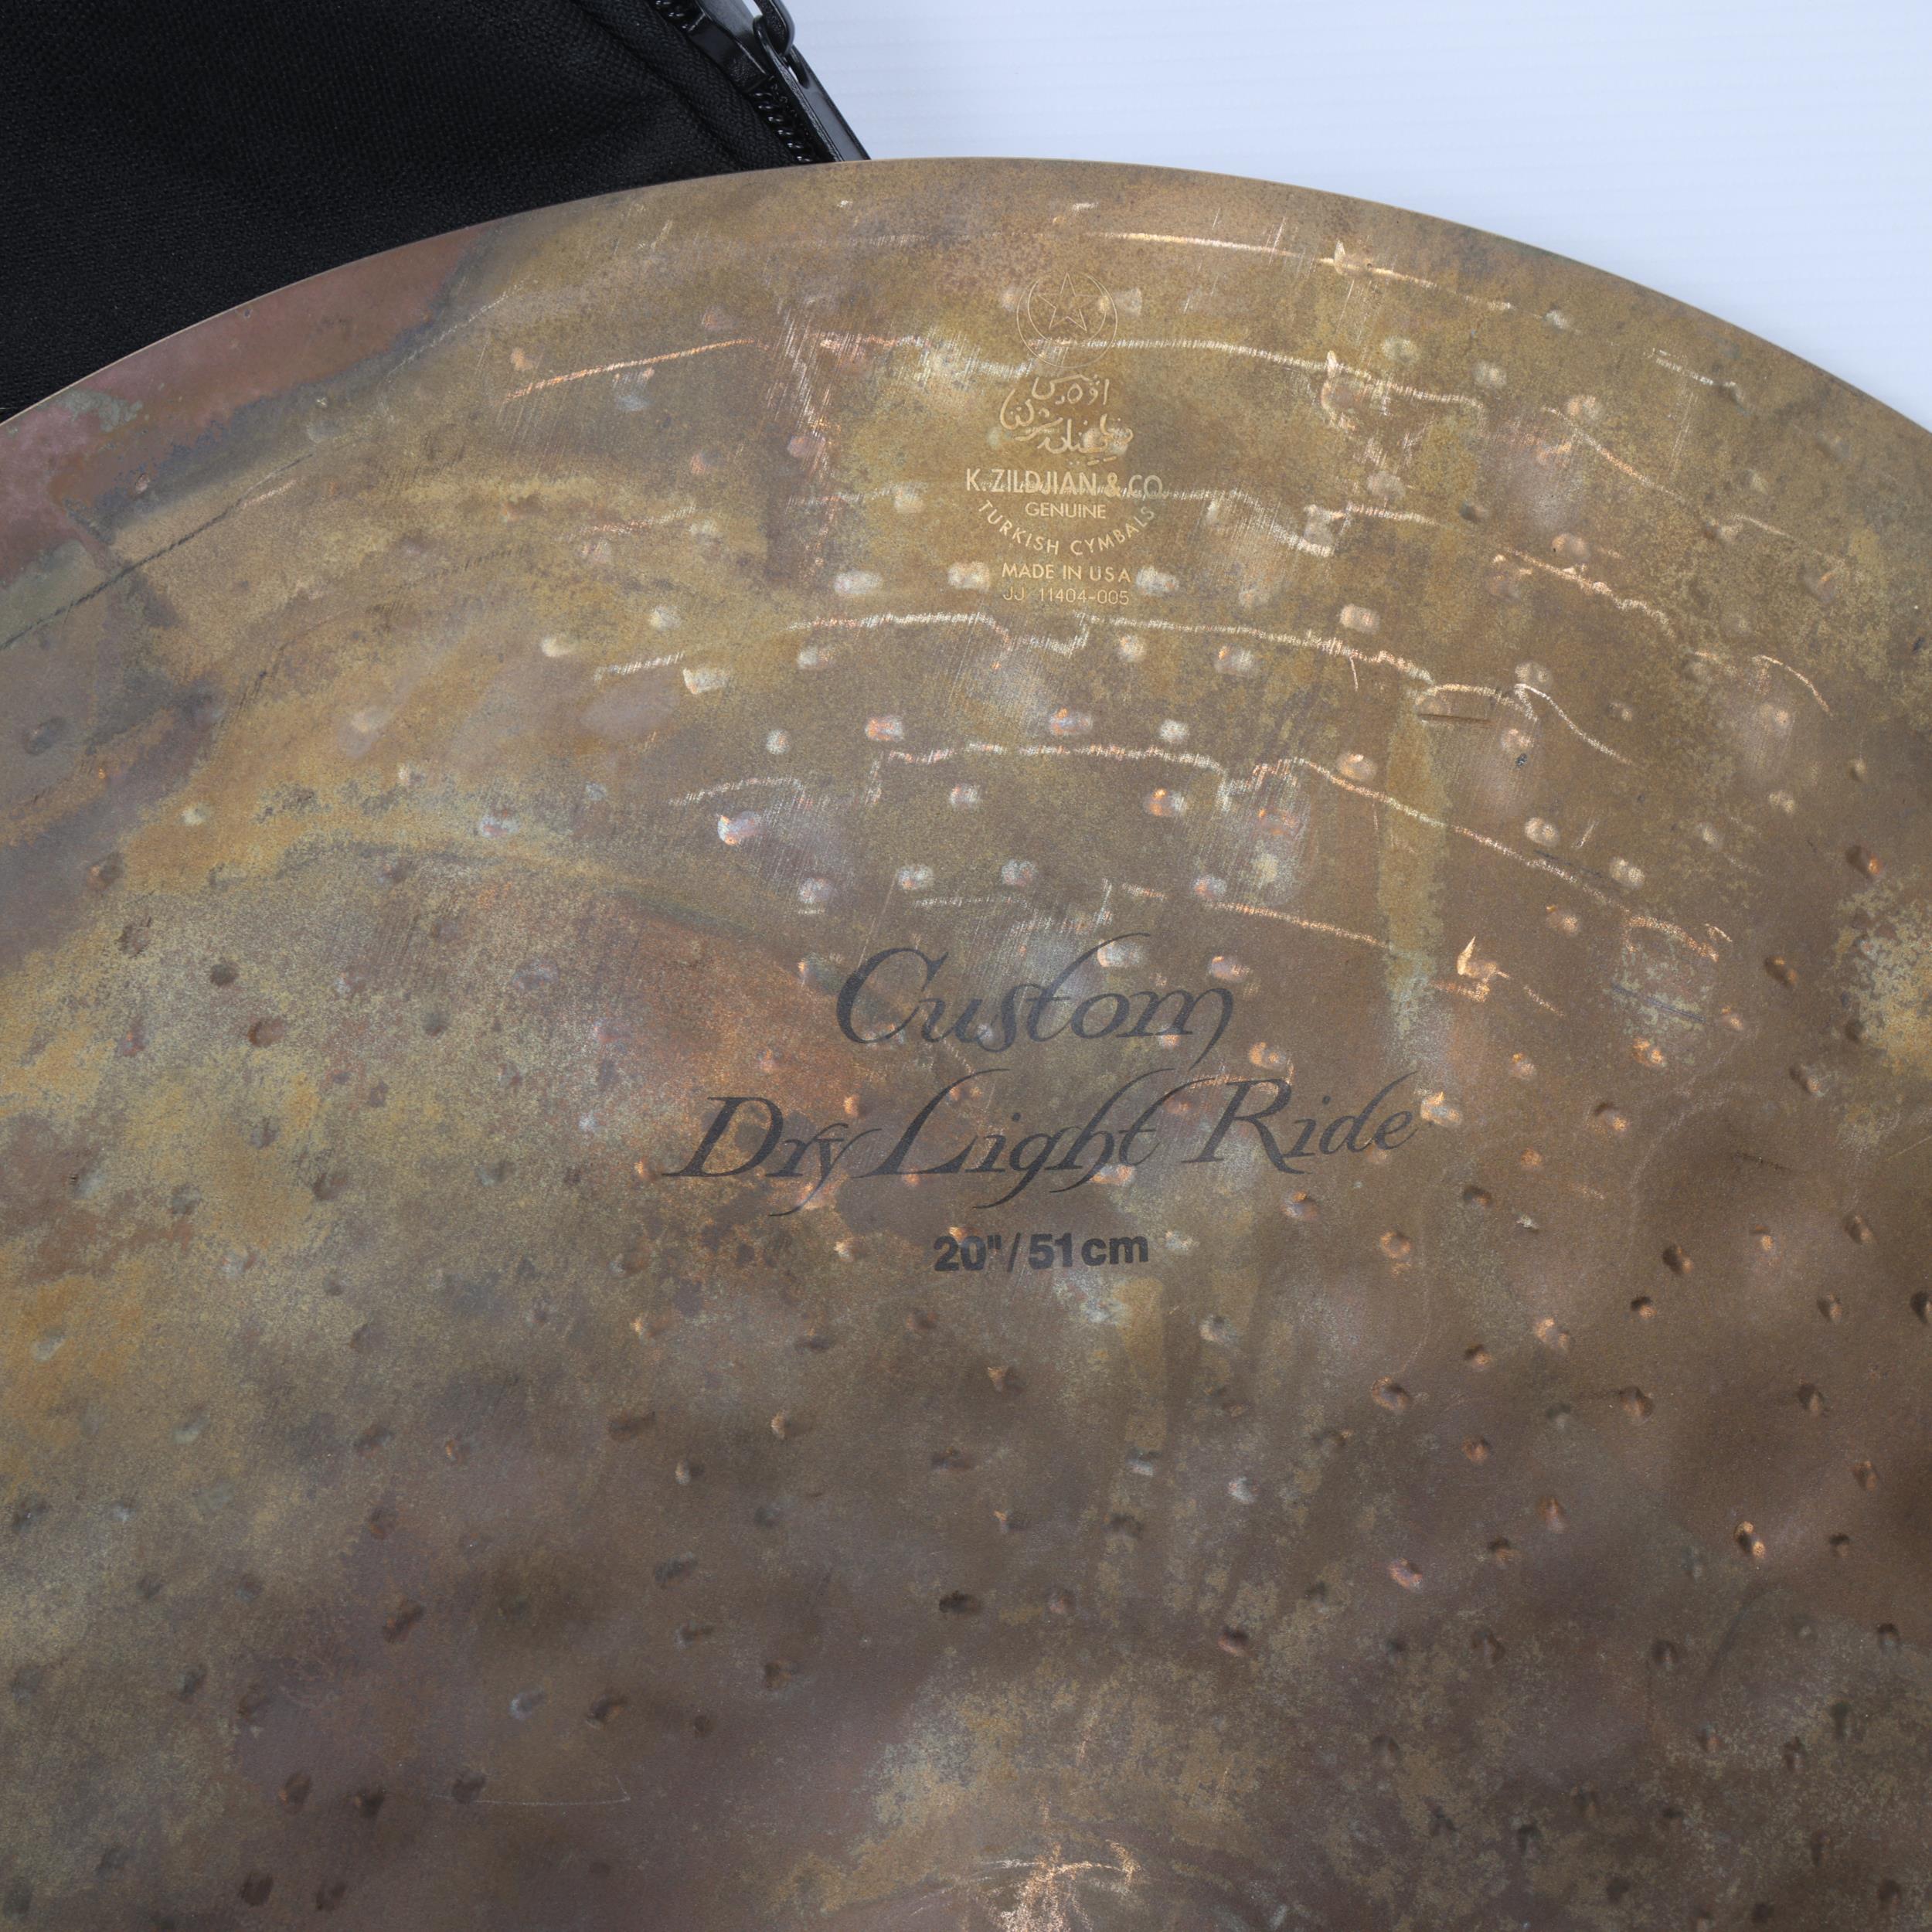 JIMI HENDRIX EXPERIENCE Zildjian Cymbal (1) Owned by MITCH MITCHELL. One 20inch Zildjian Custom - Image 2 of 3